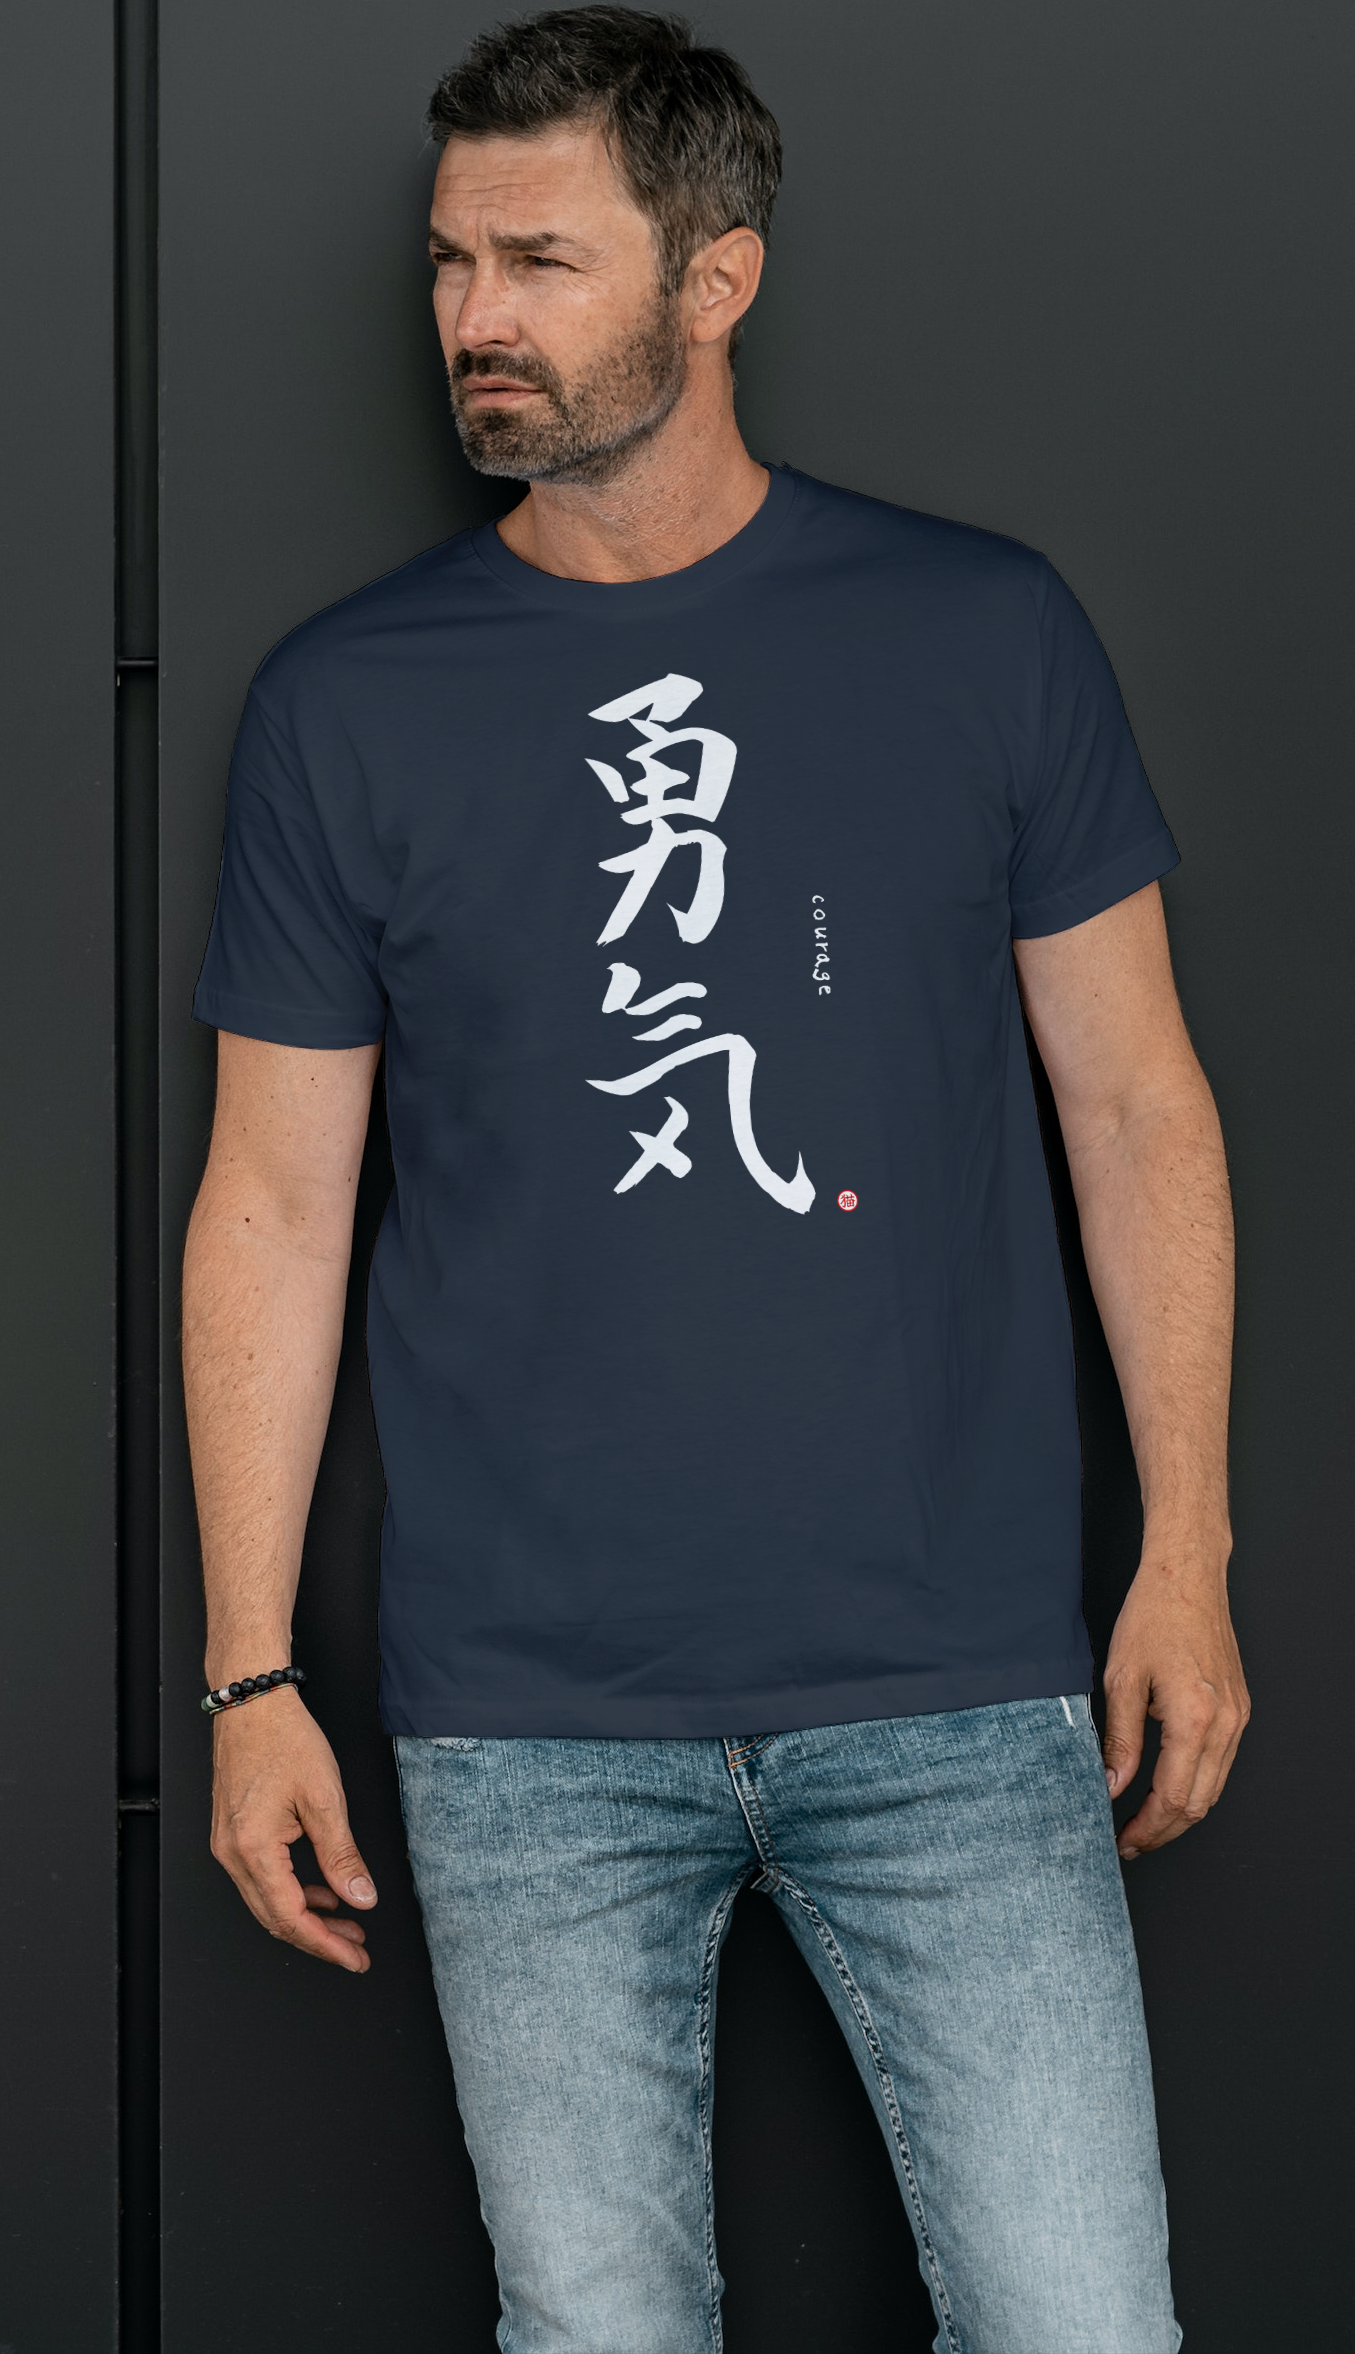 Courage-Written in Kanji in White